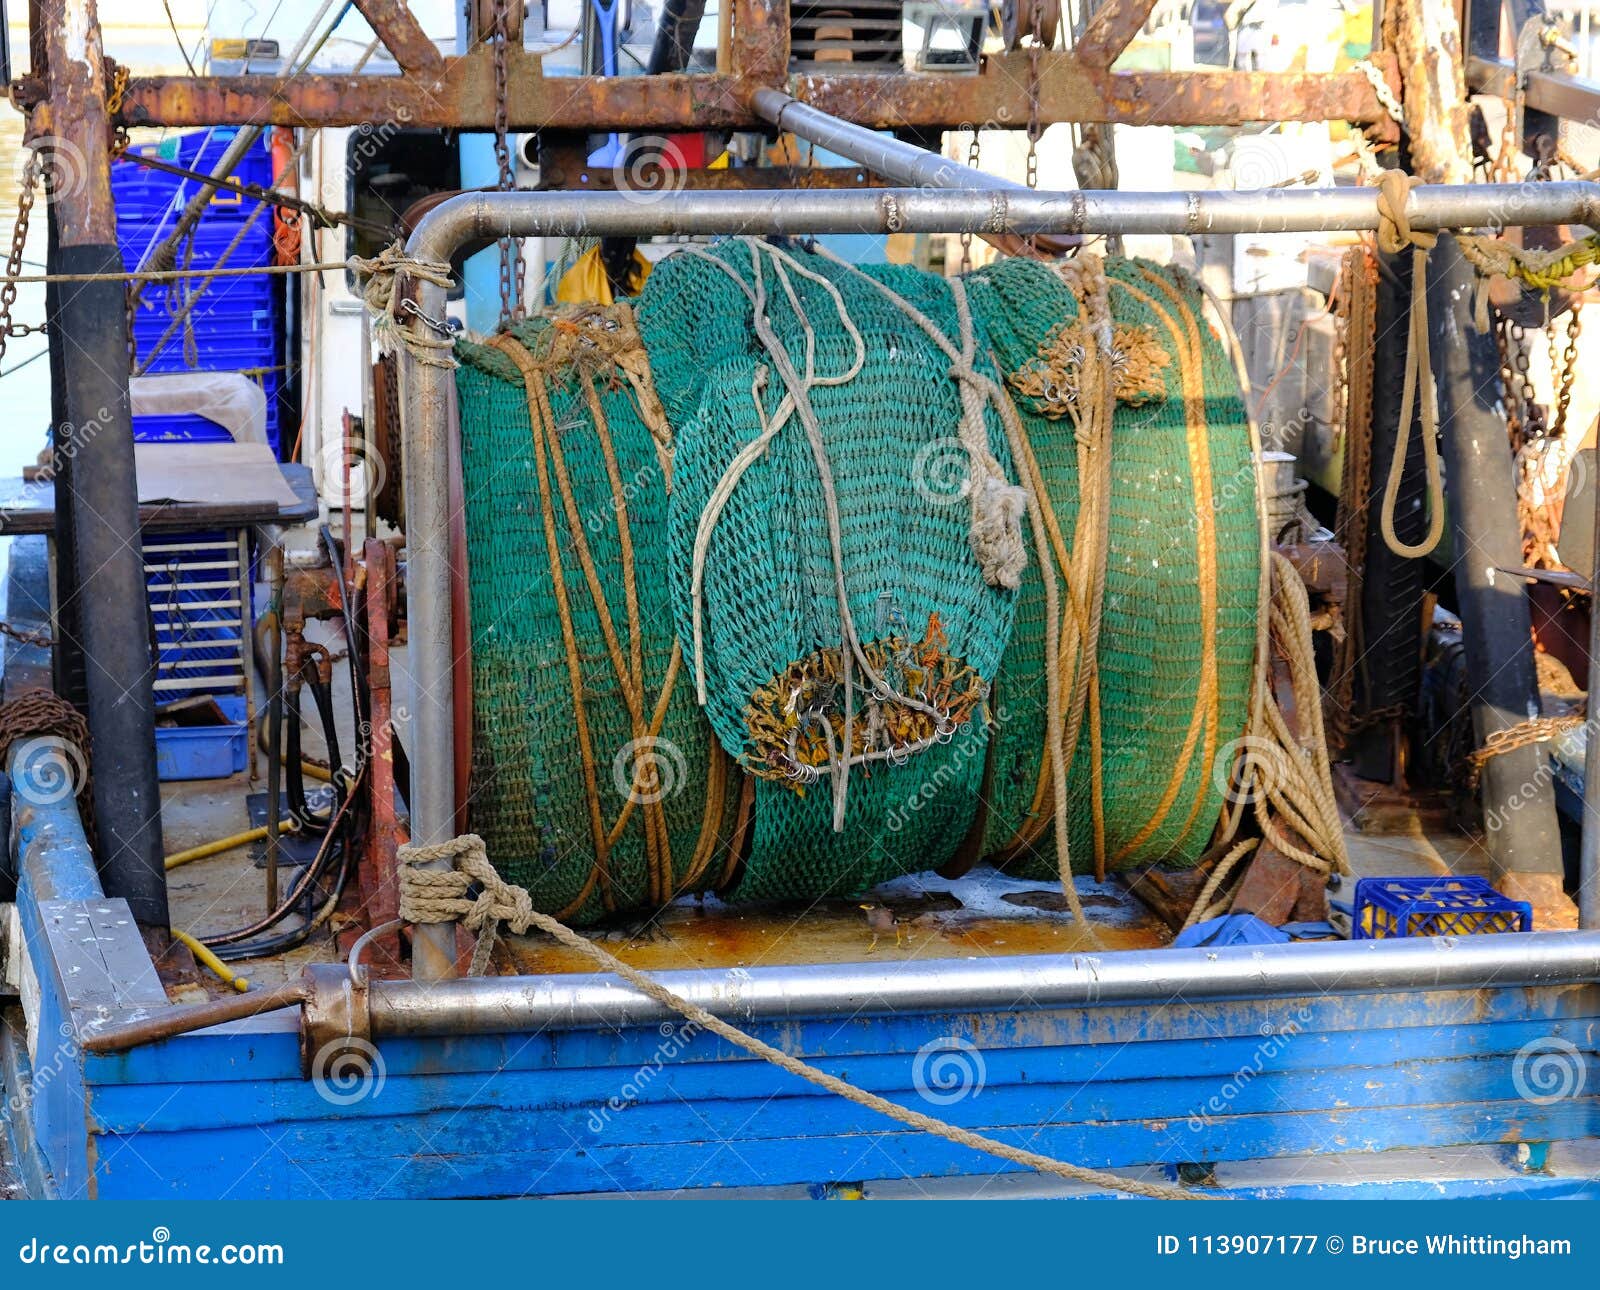 Rolled Up Green Fishing Net on Deep Sea Trawler Stock Image